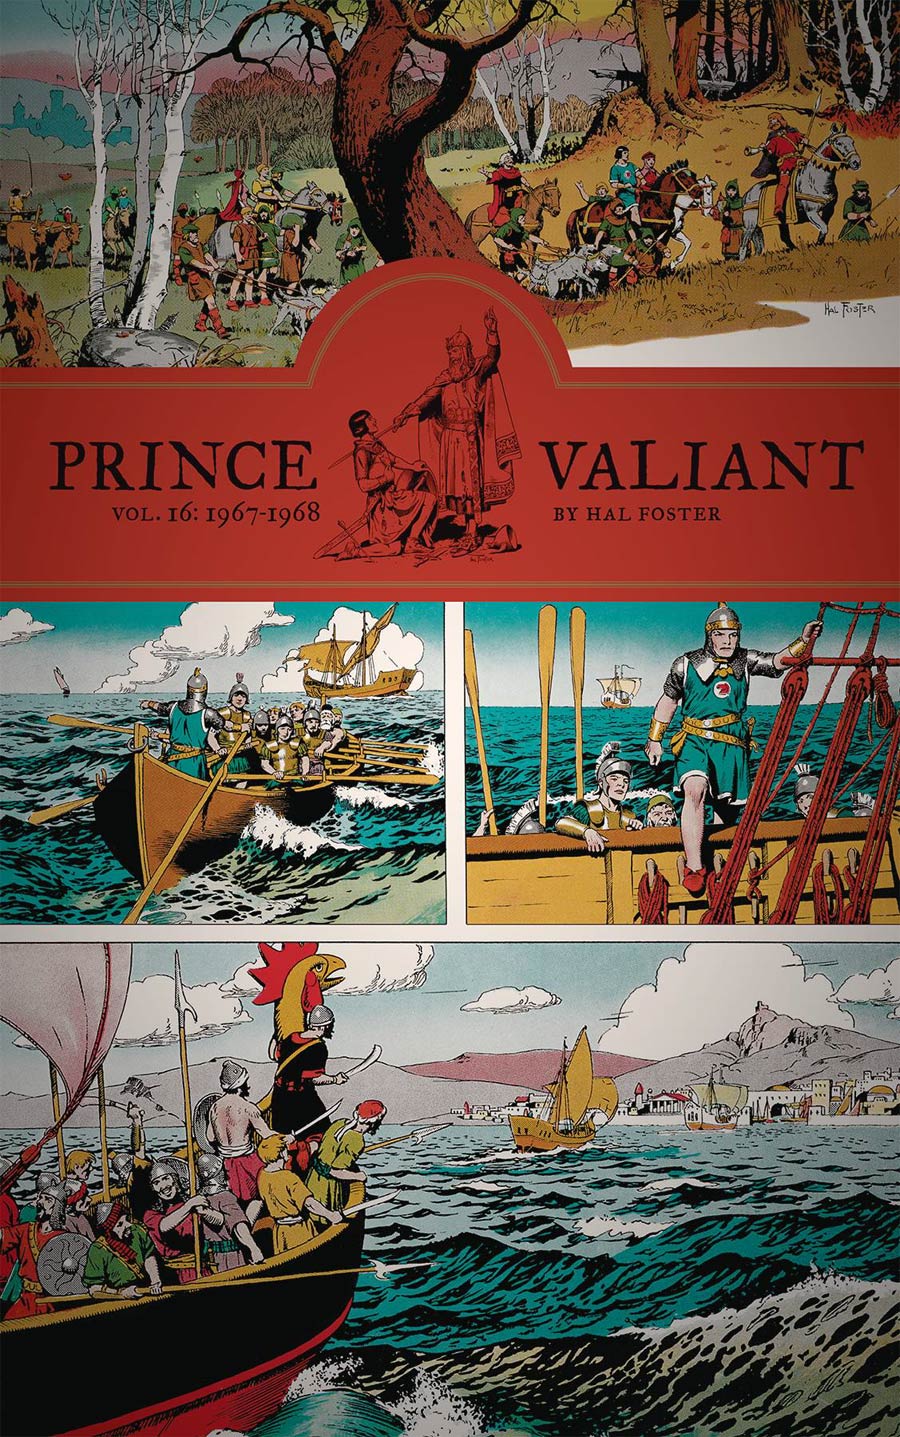 Prince Valiant Vol 16 1967-1968 HC